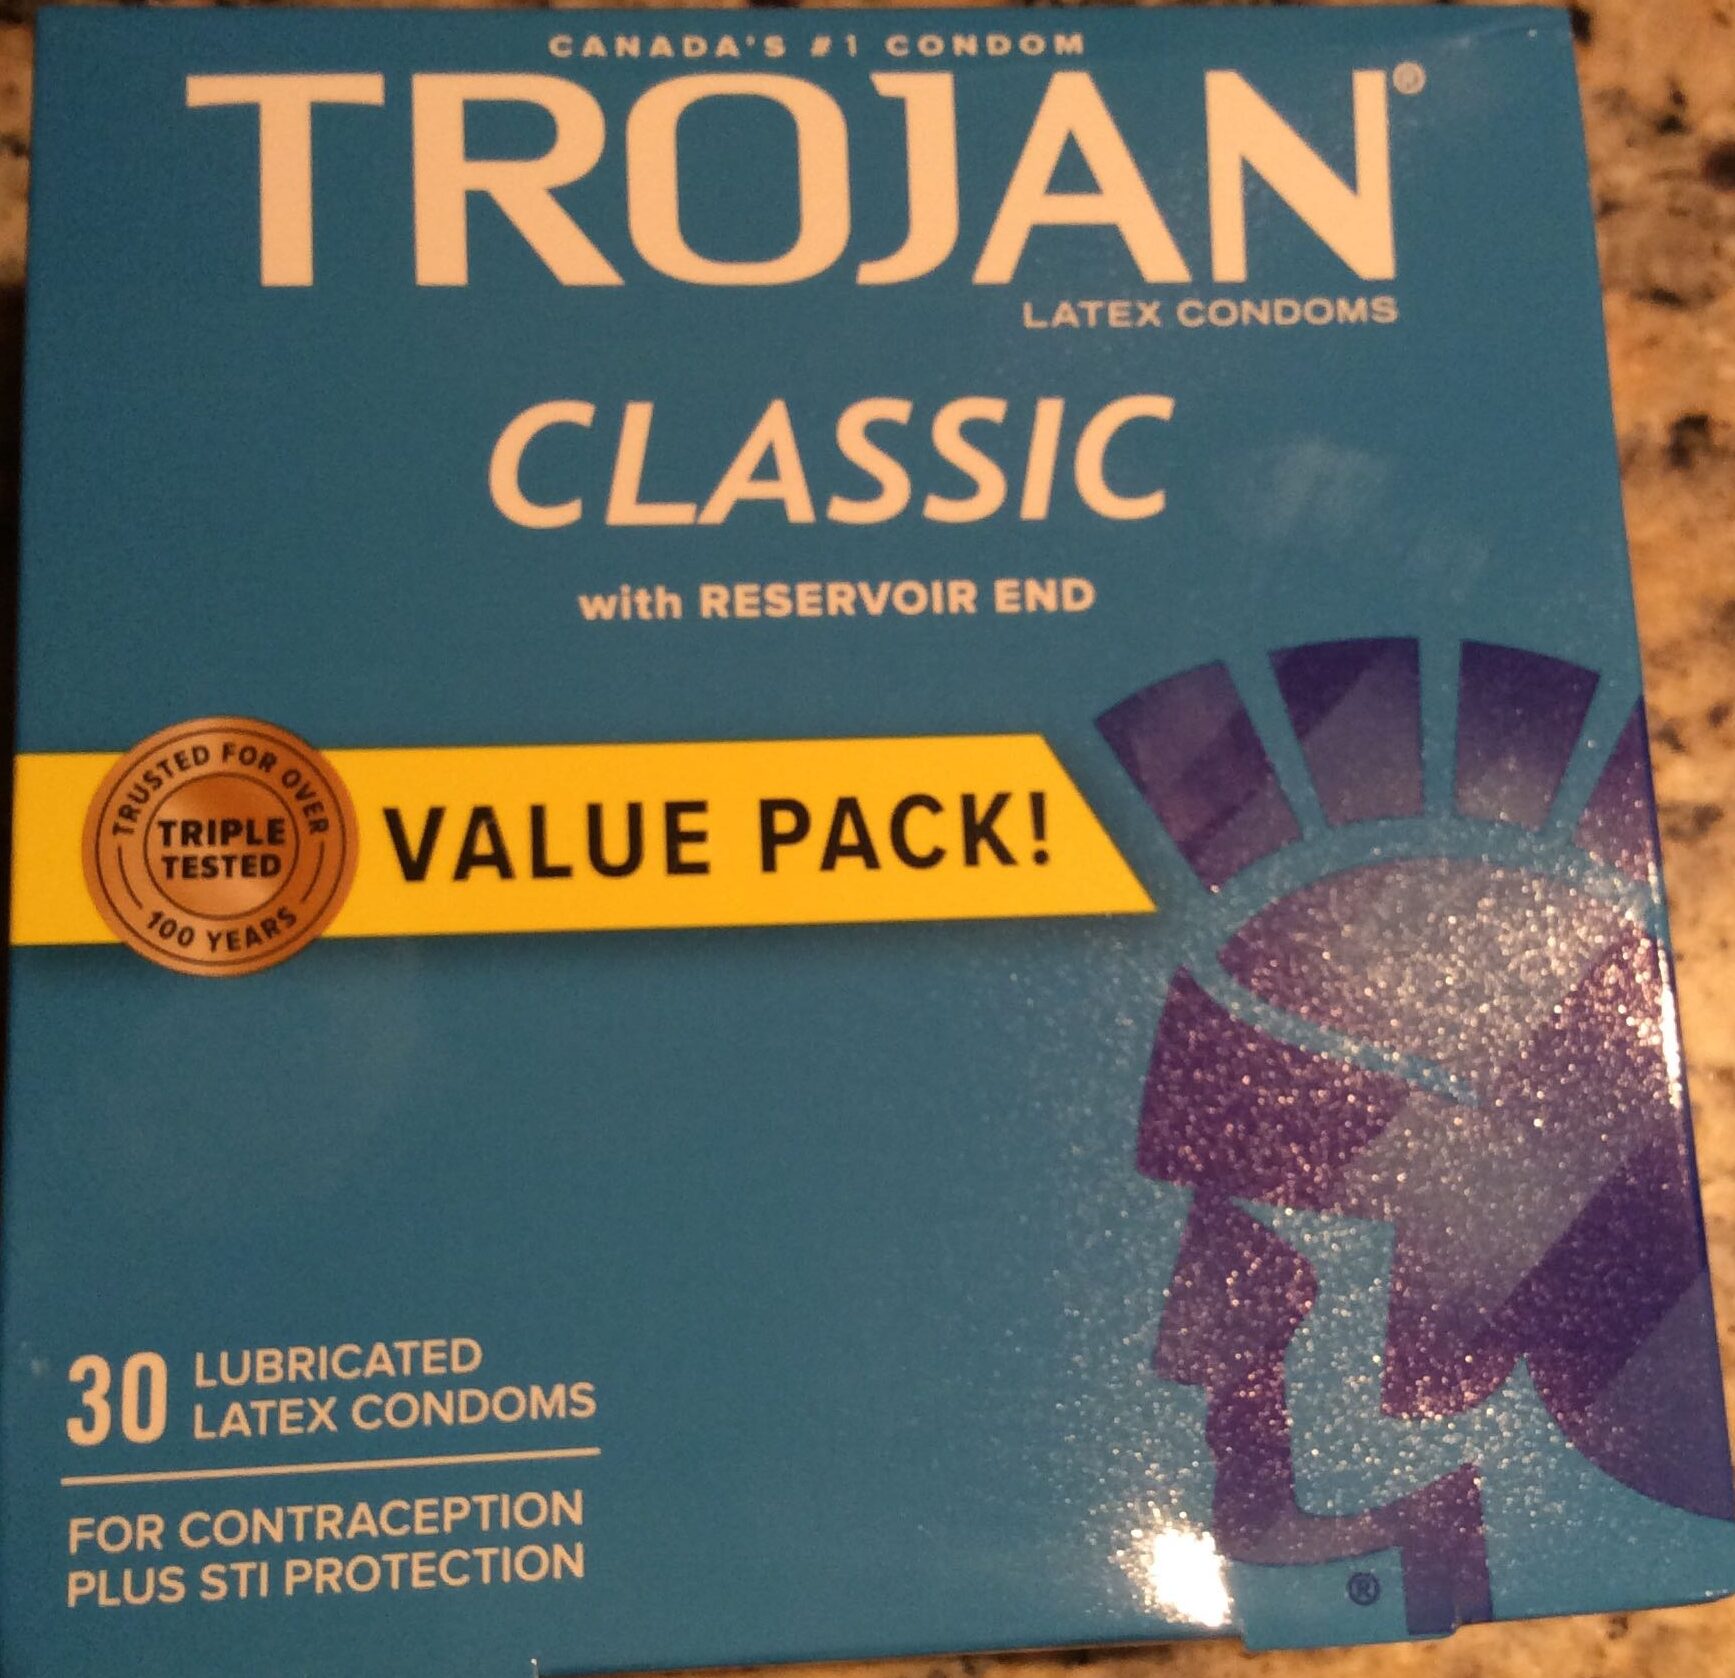 Classic Latex Condoms with Reservoir End - Produto - en